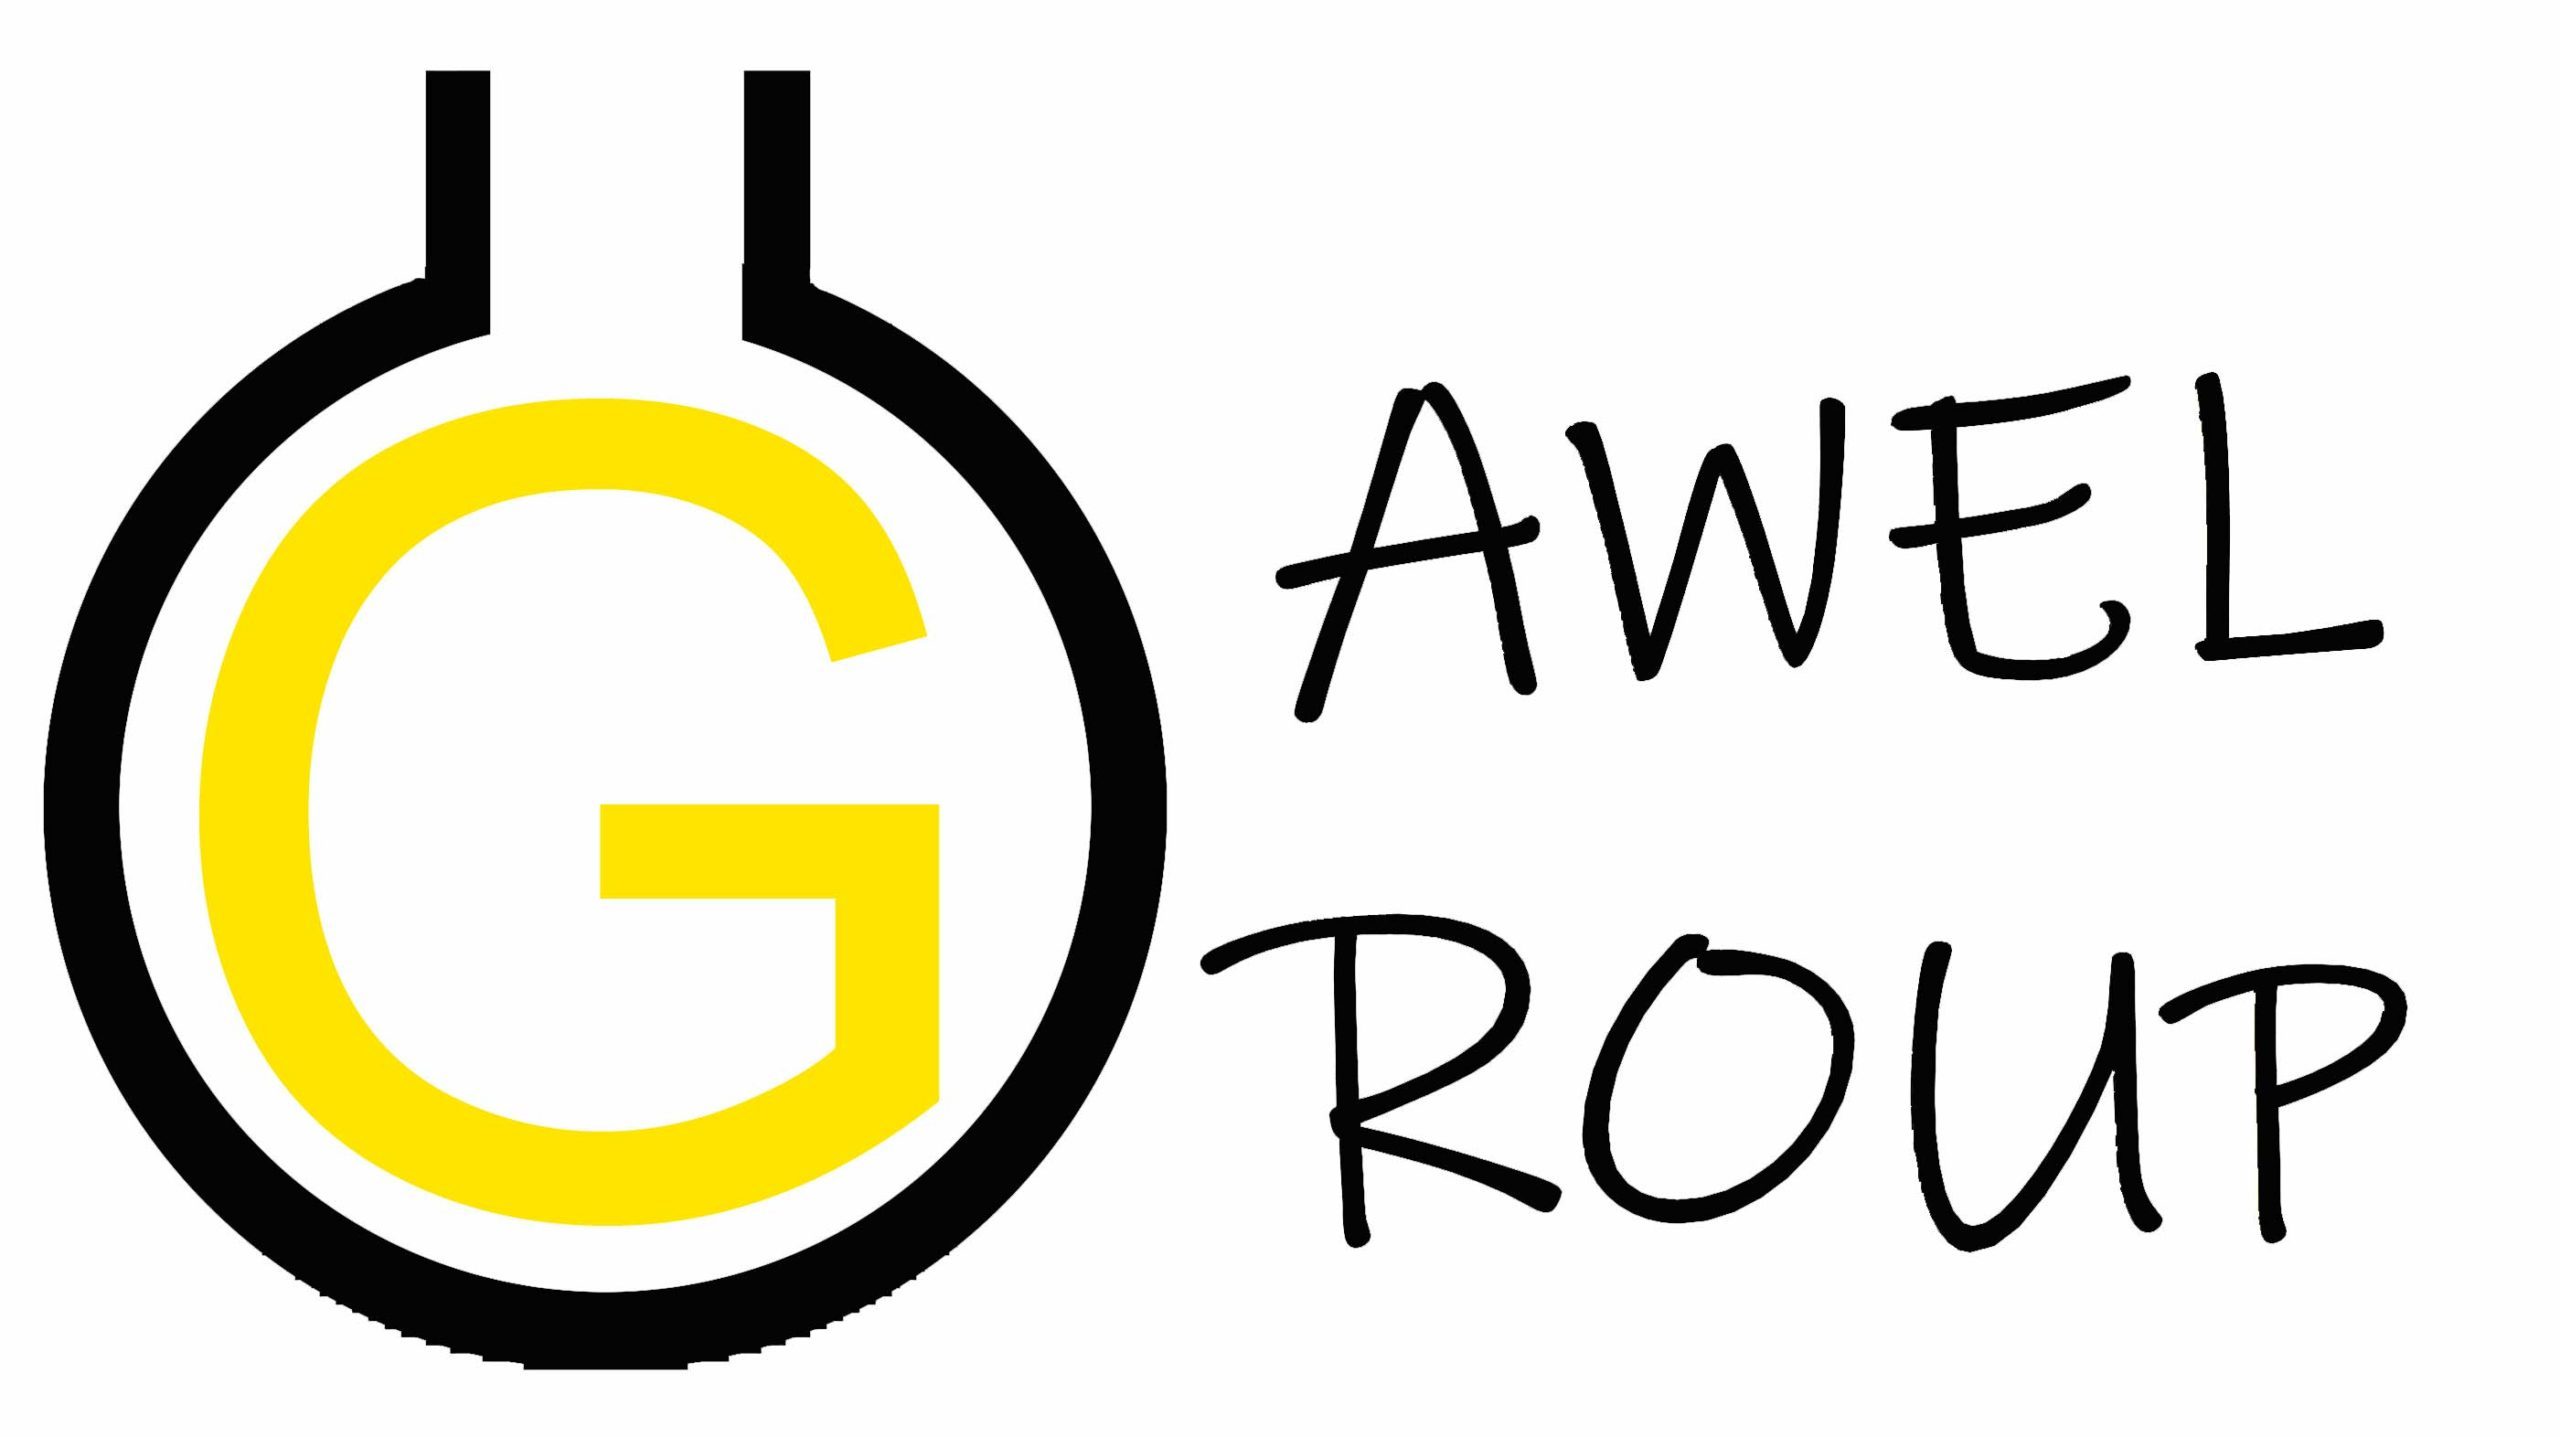 Gawel Research Group